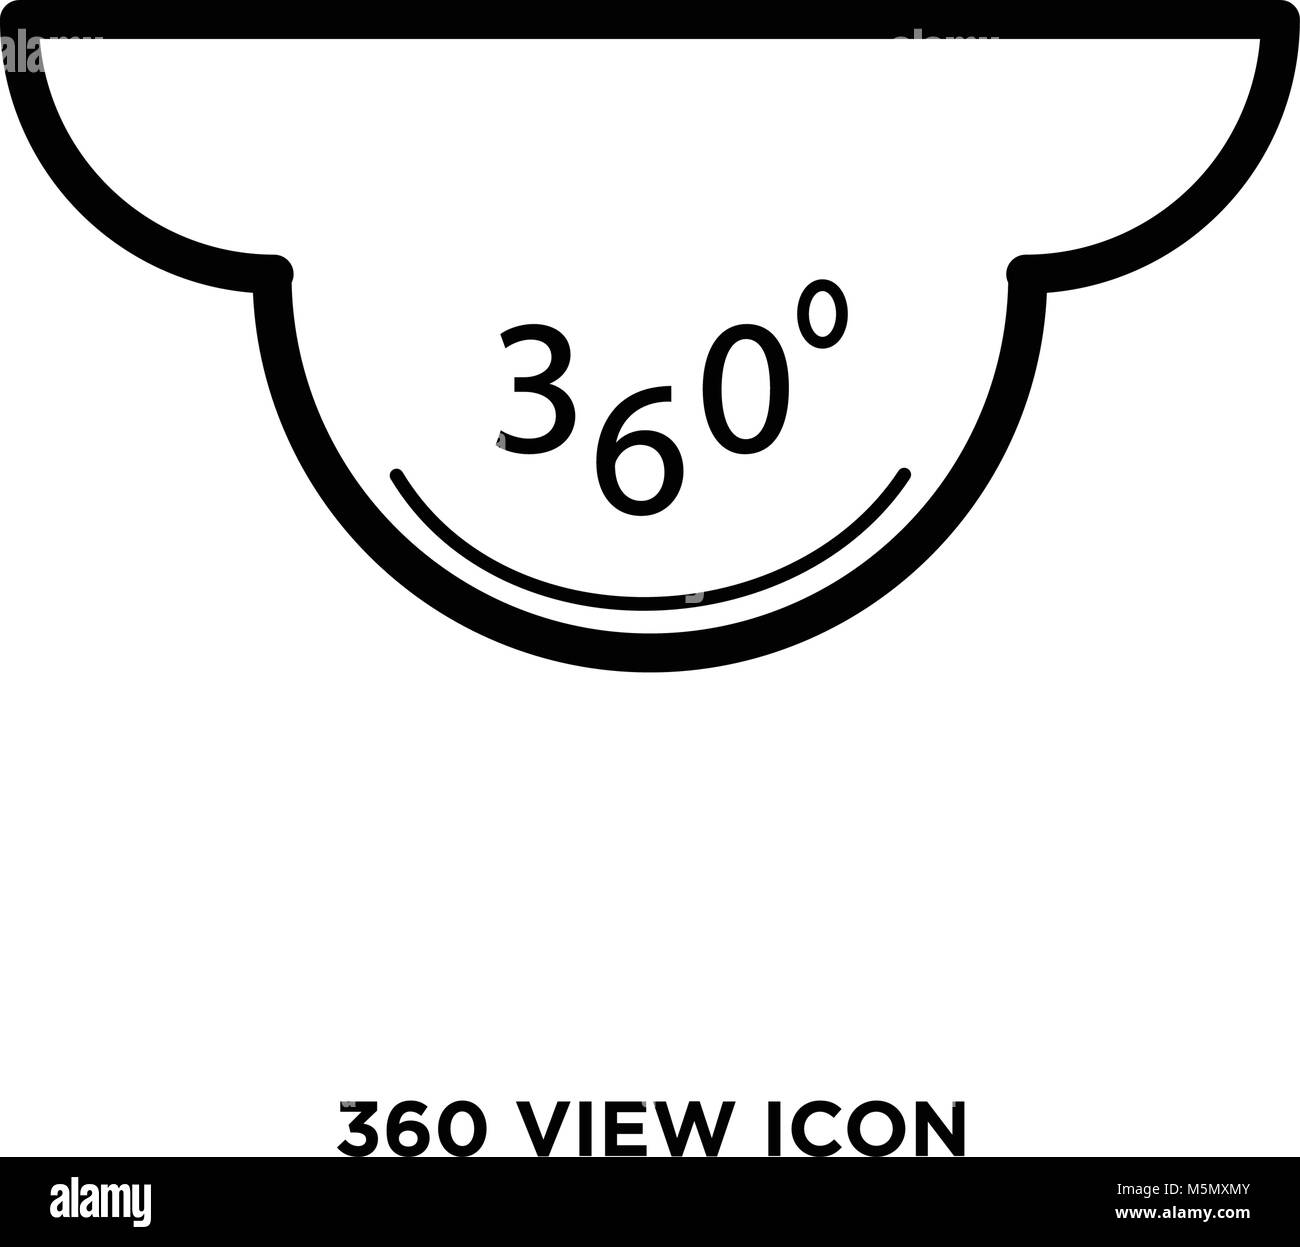 360 view icon Stock Vector